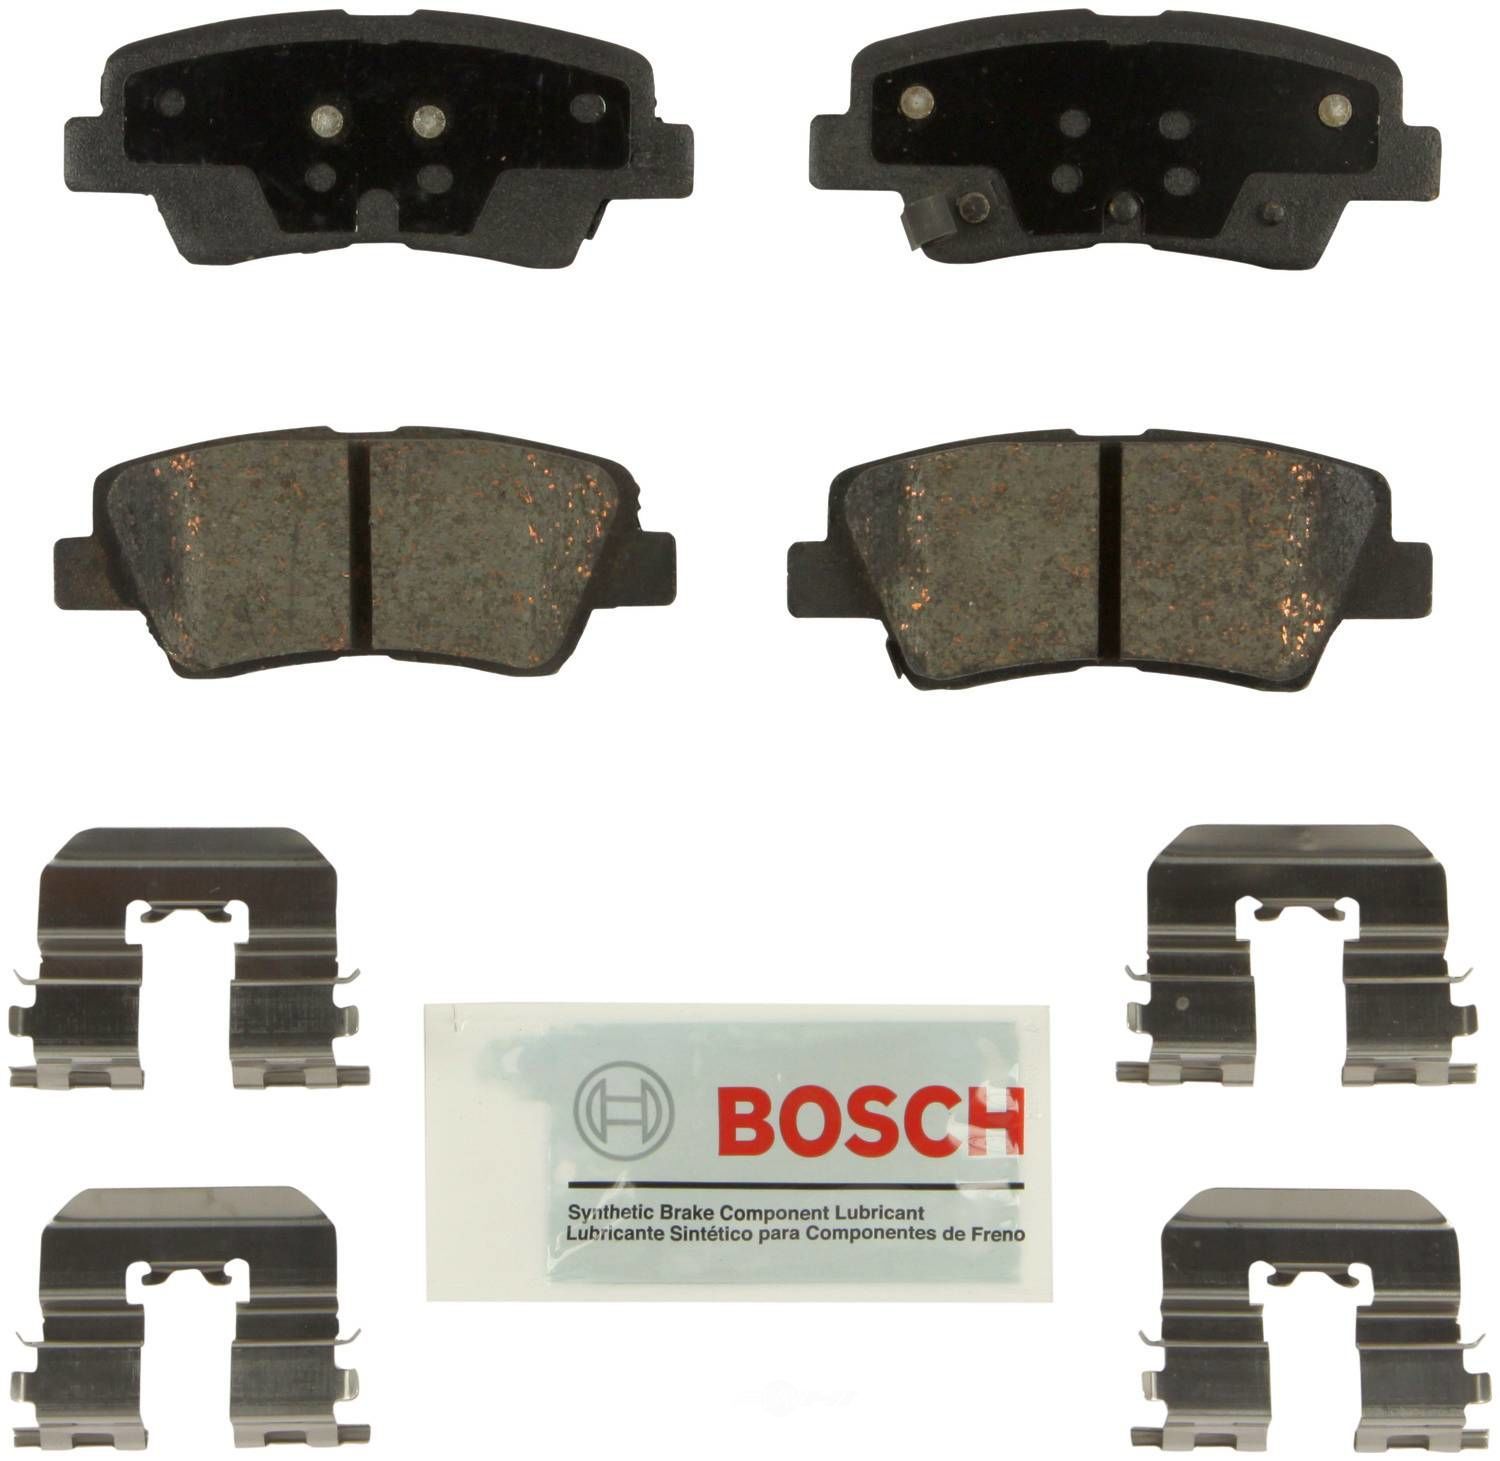 BOSCH BRAKE - Bosch Blue Ceramic Brake Pads with Hardware (Rear) - BQC BE1544H